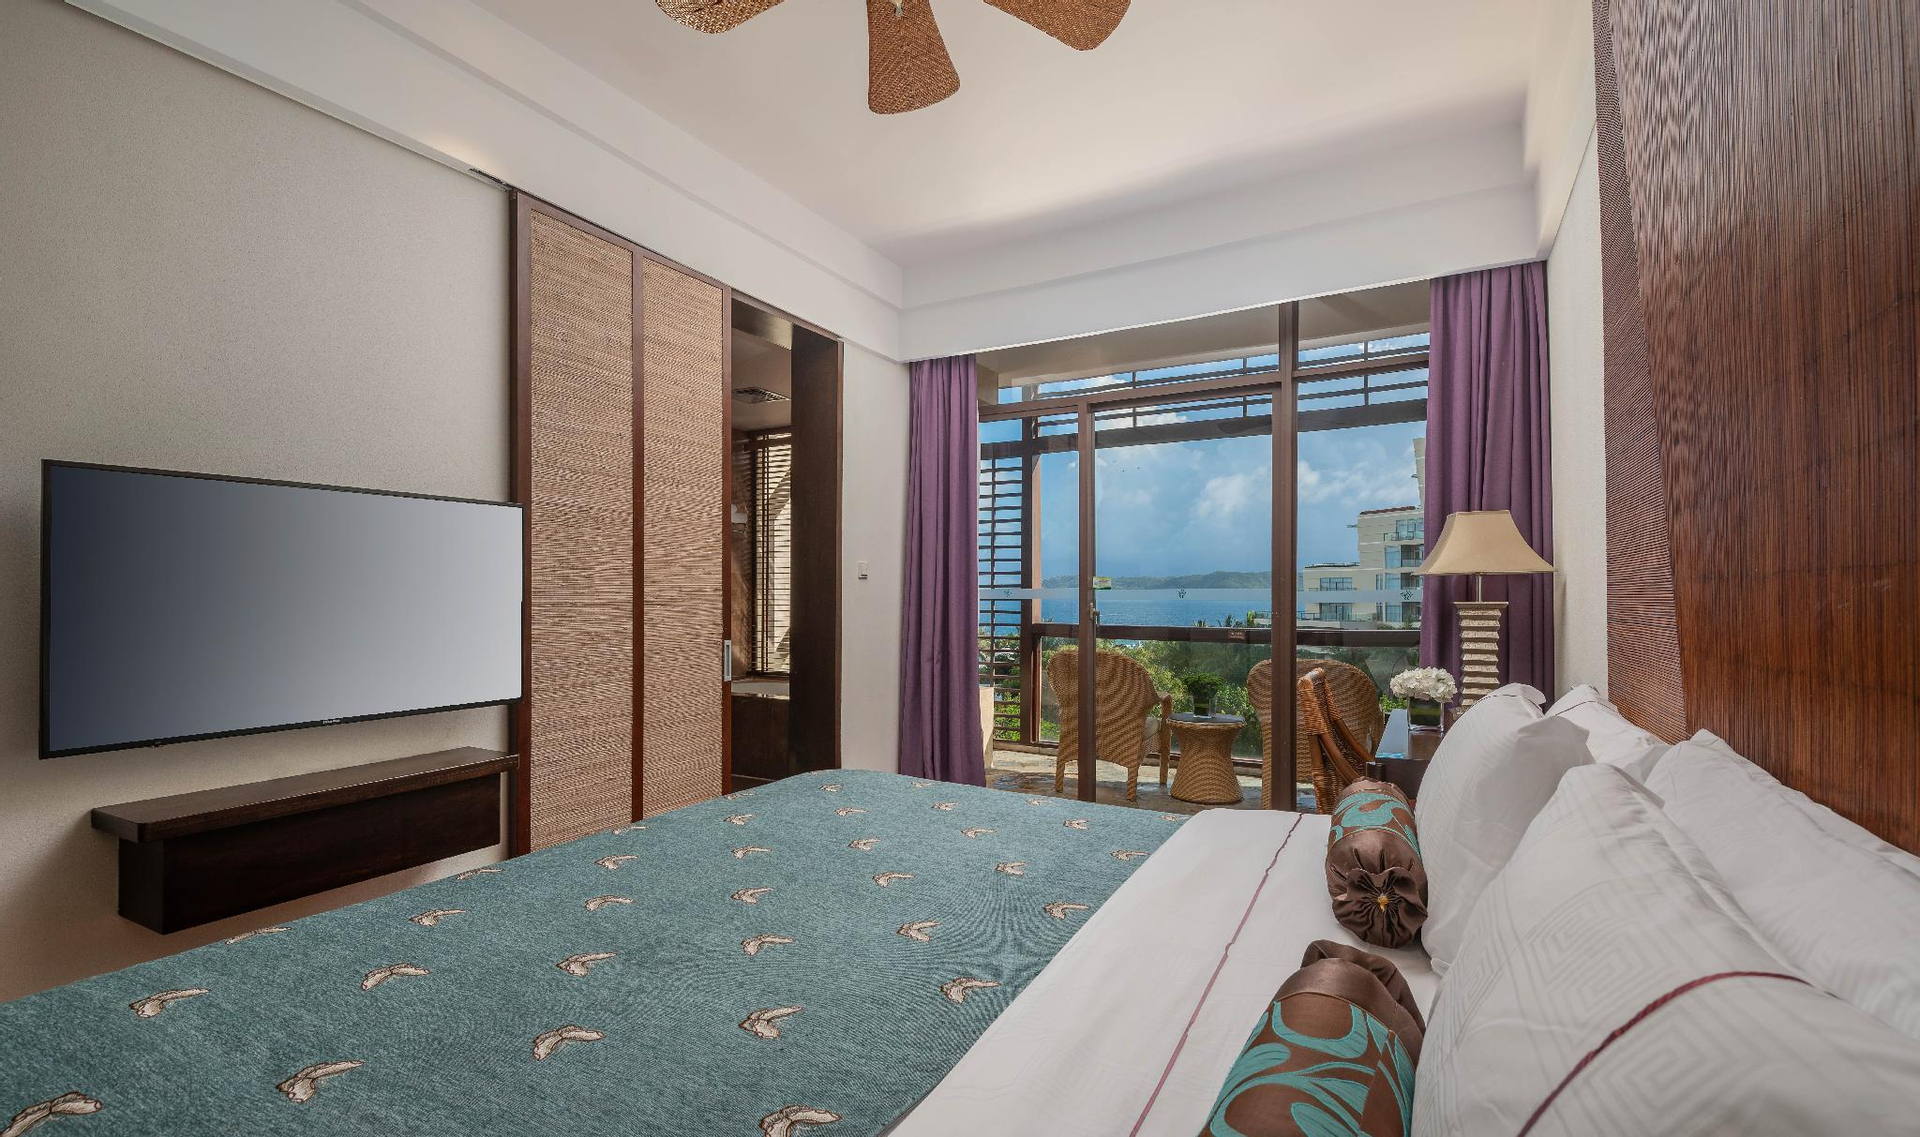 Bedroom 4, Yalong Bay Mangrove Tree Resort, Sanya